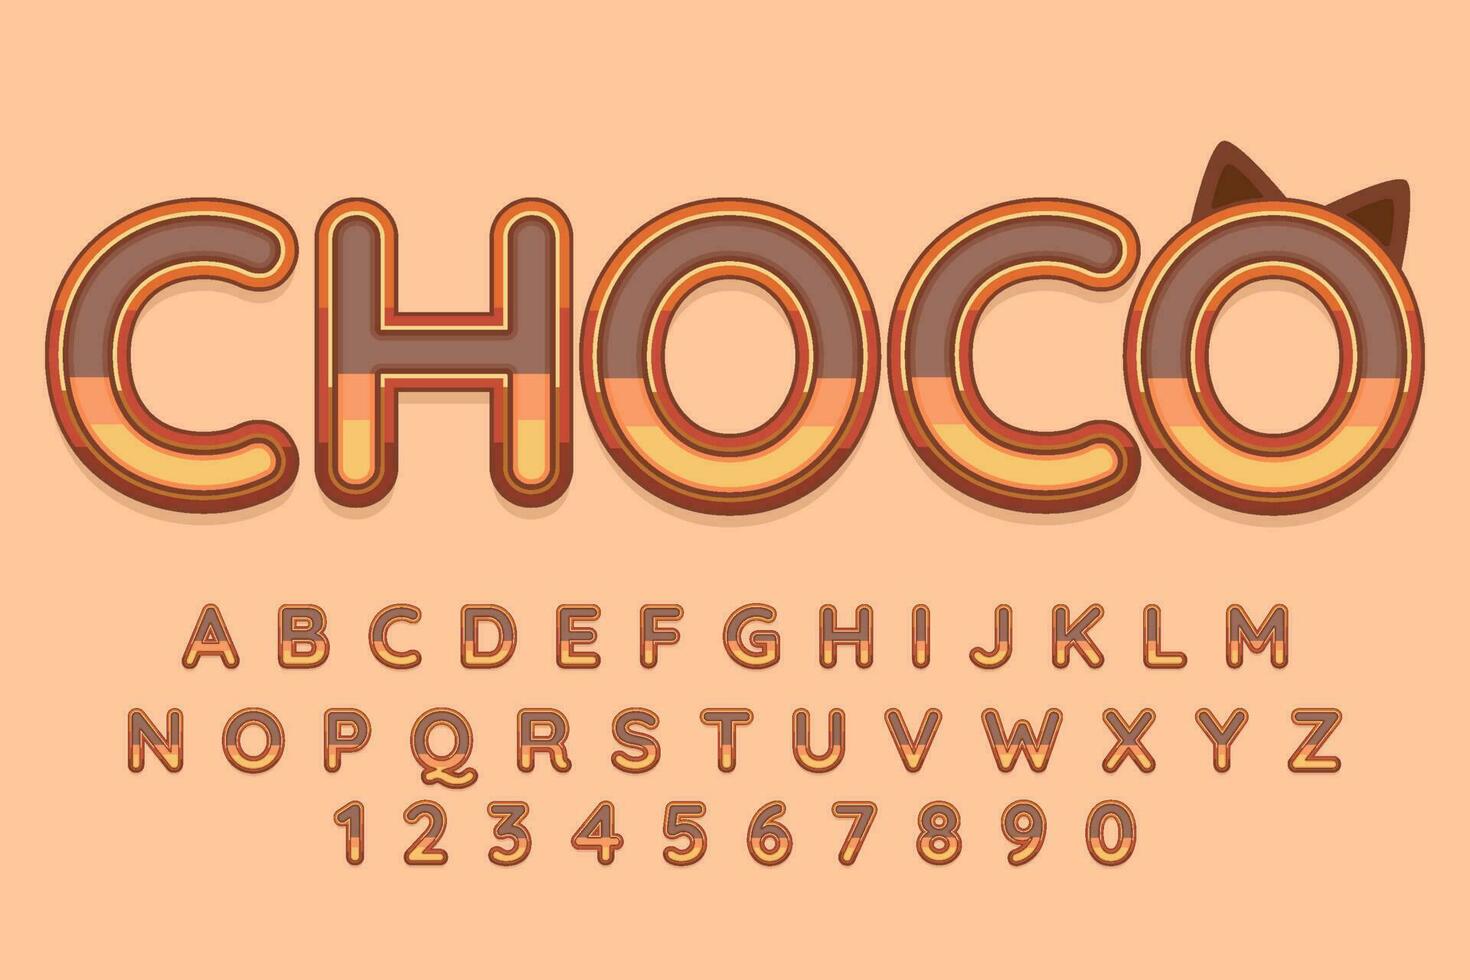 dekorativ süß Schoko editierbar Text bewirken Vektor Design